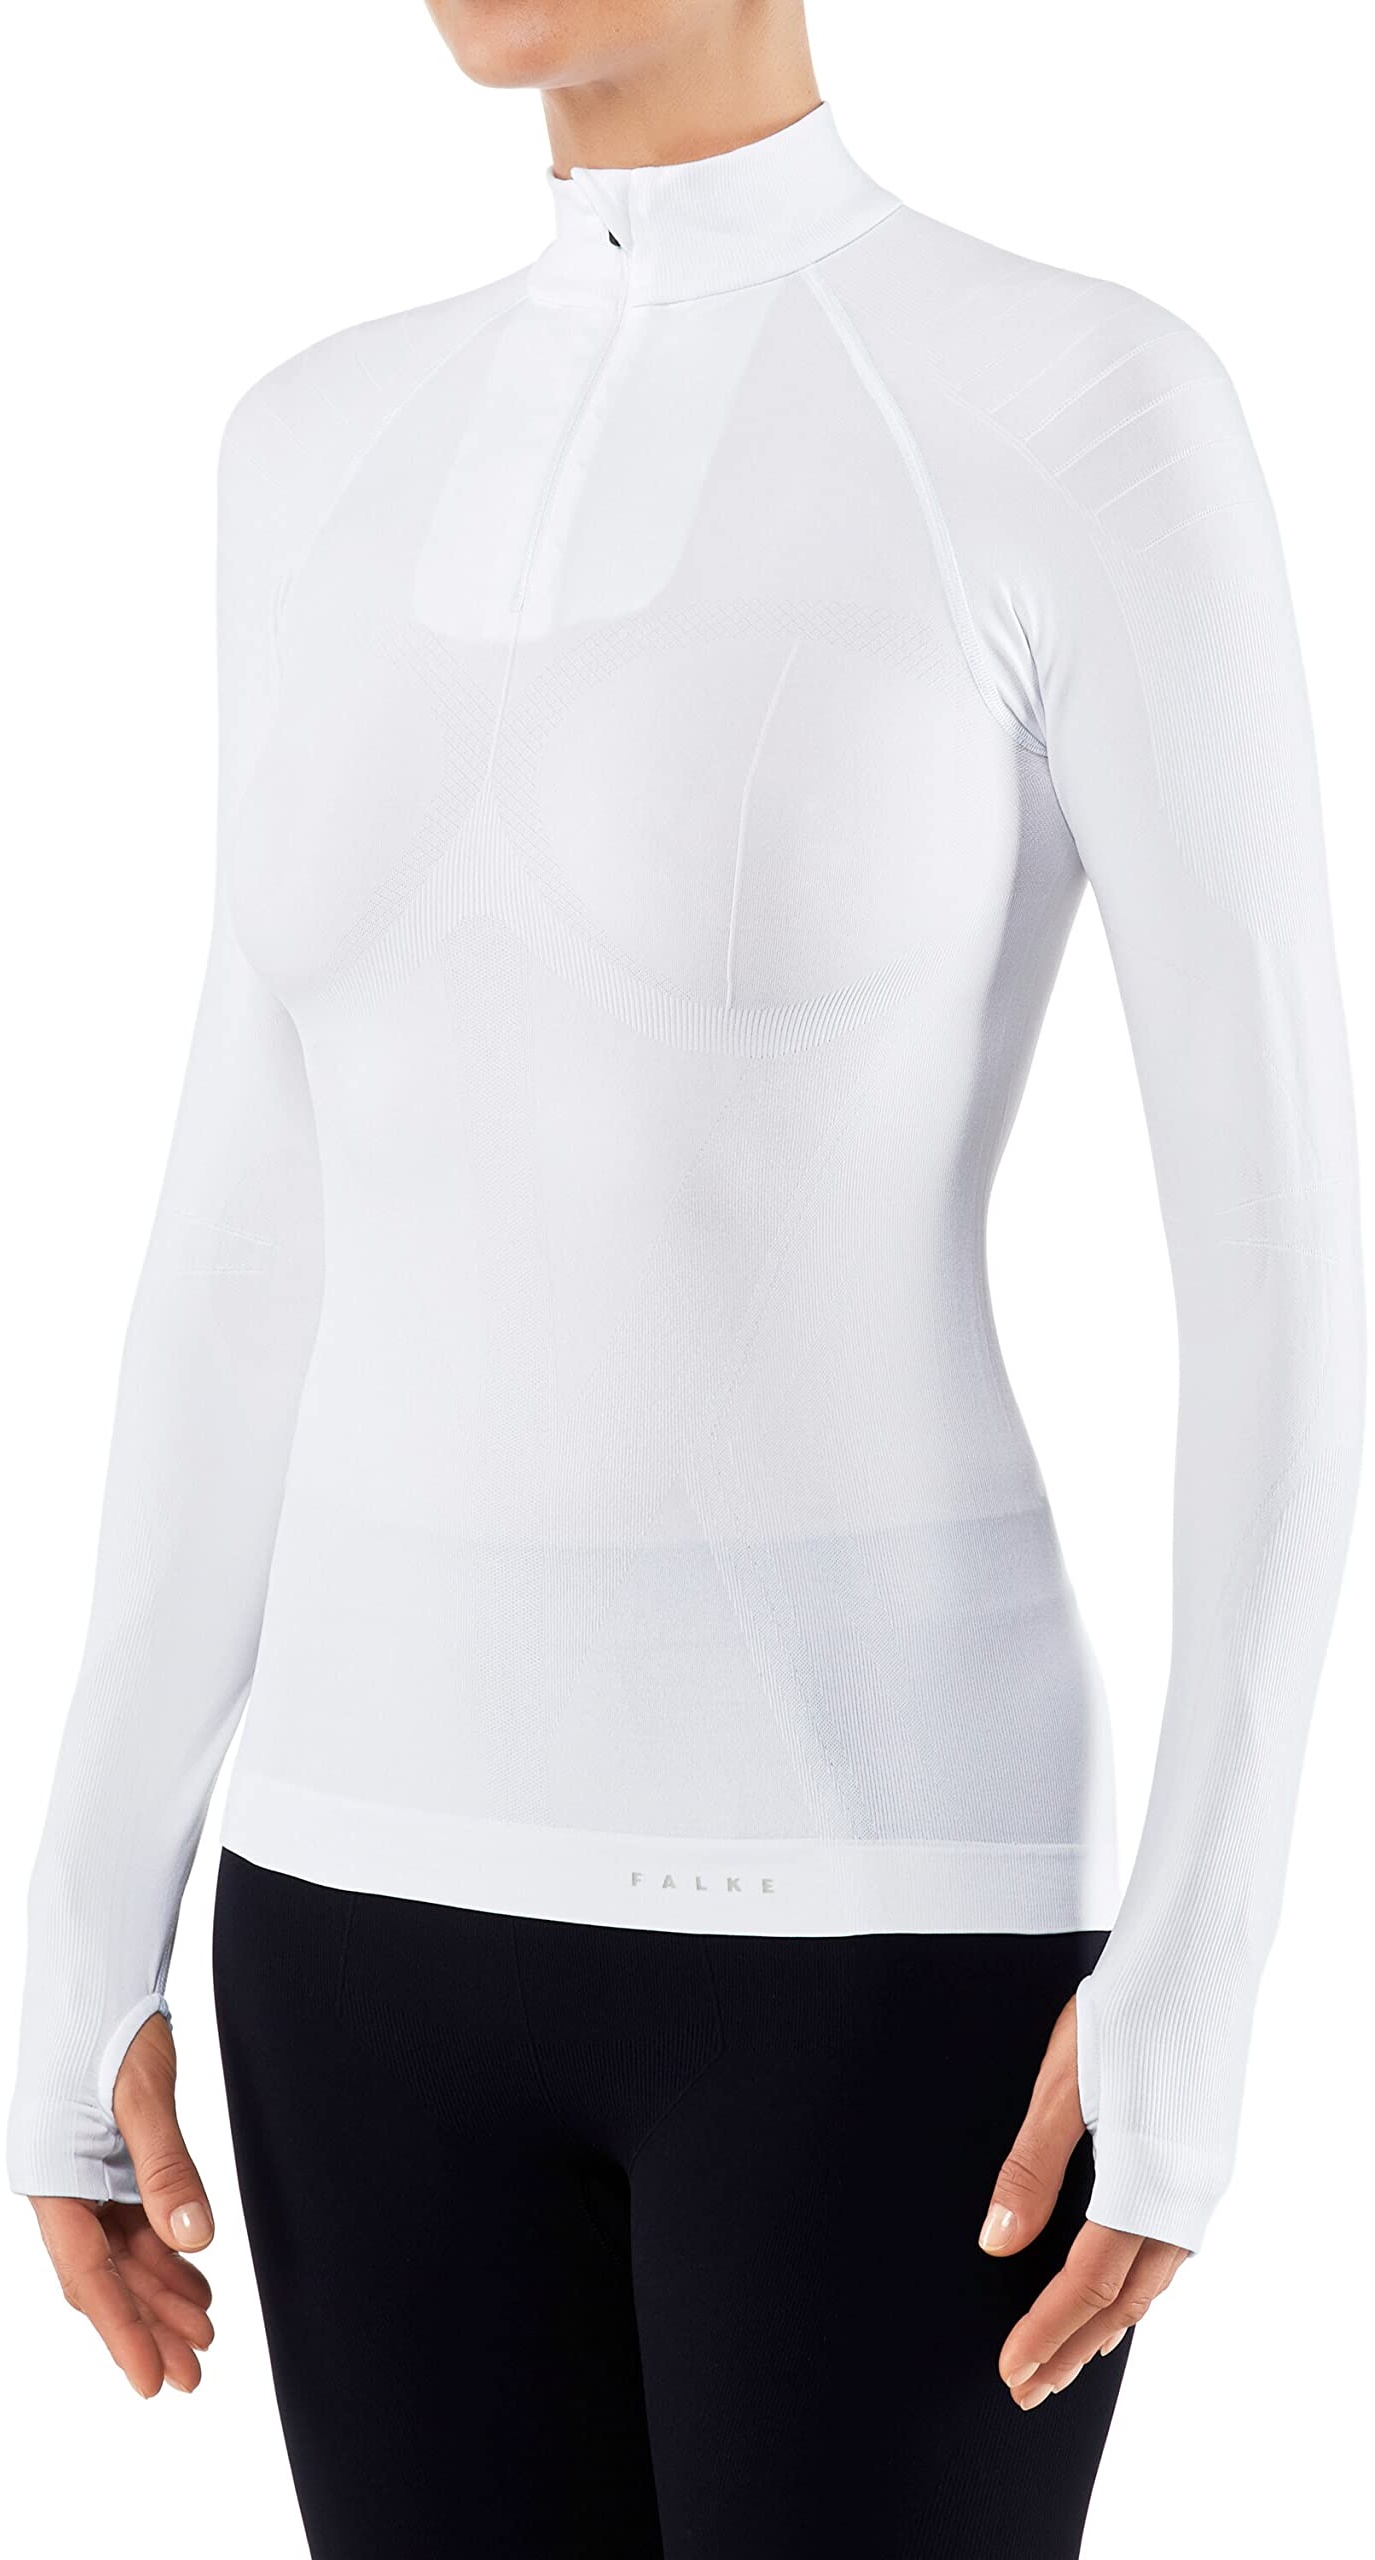 FALKE Damen Langarmshirt Warm Tight Fit Zip, Sport Performance Material, 1 Stück, Weiß (White 2860), Größe: XL